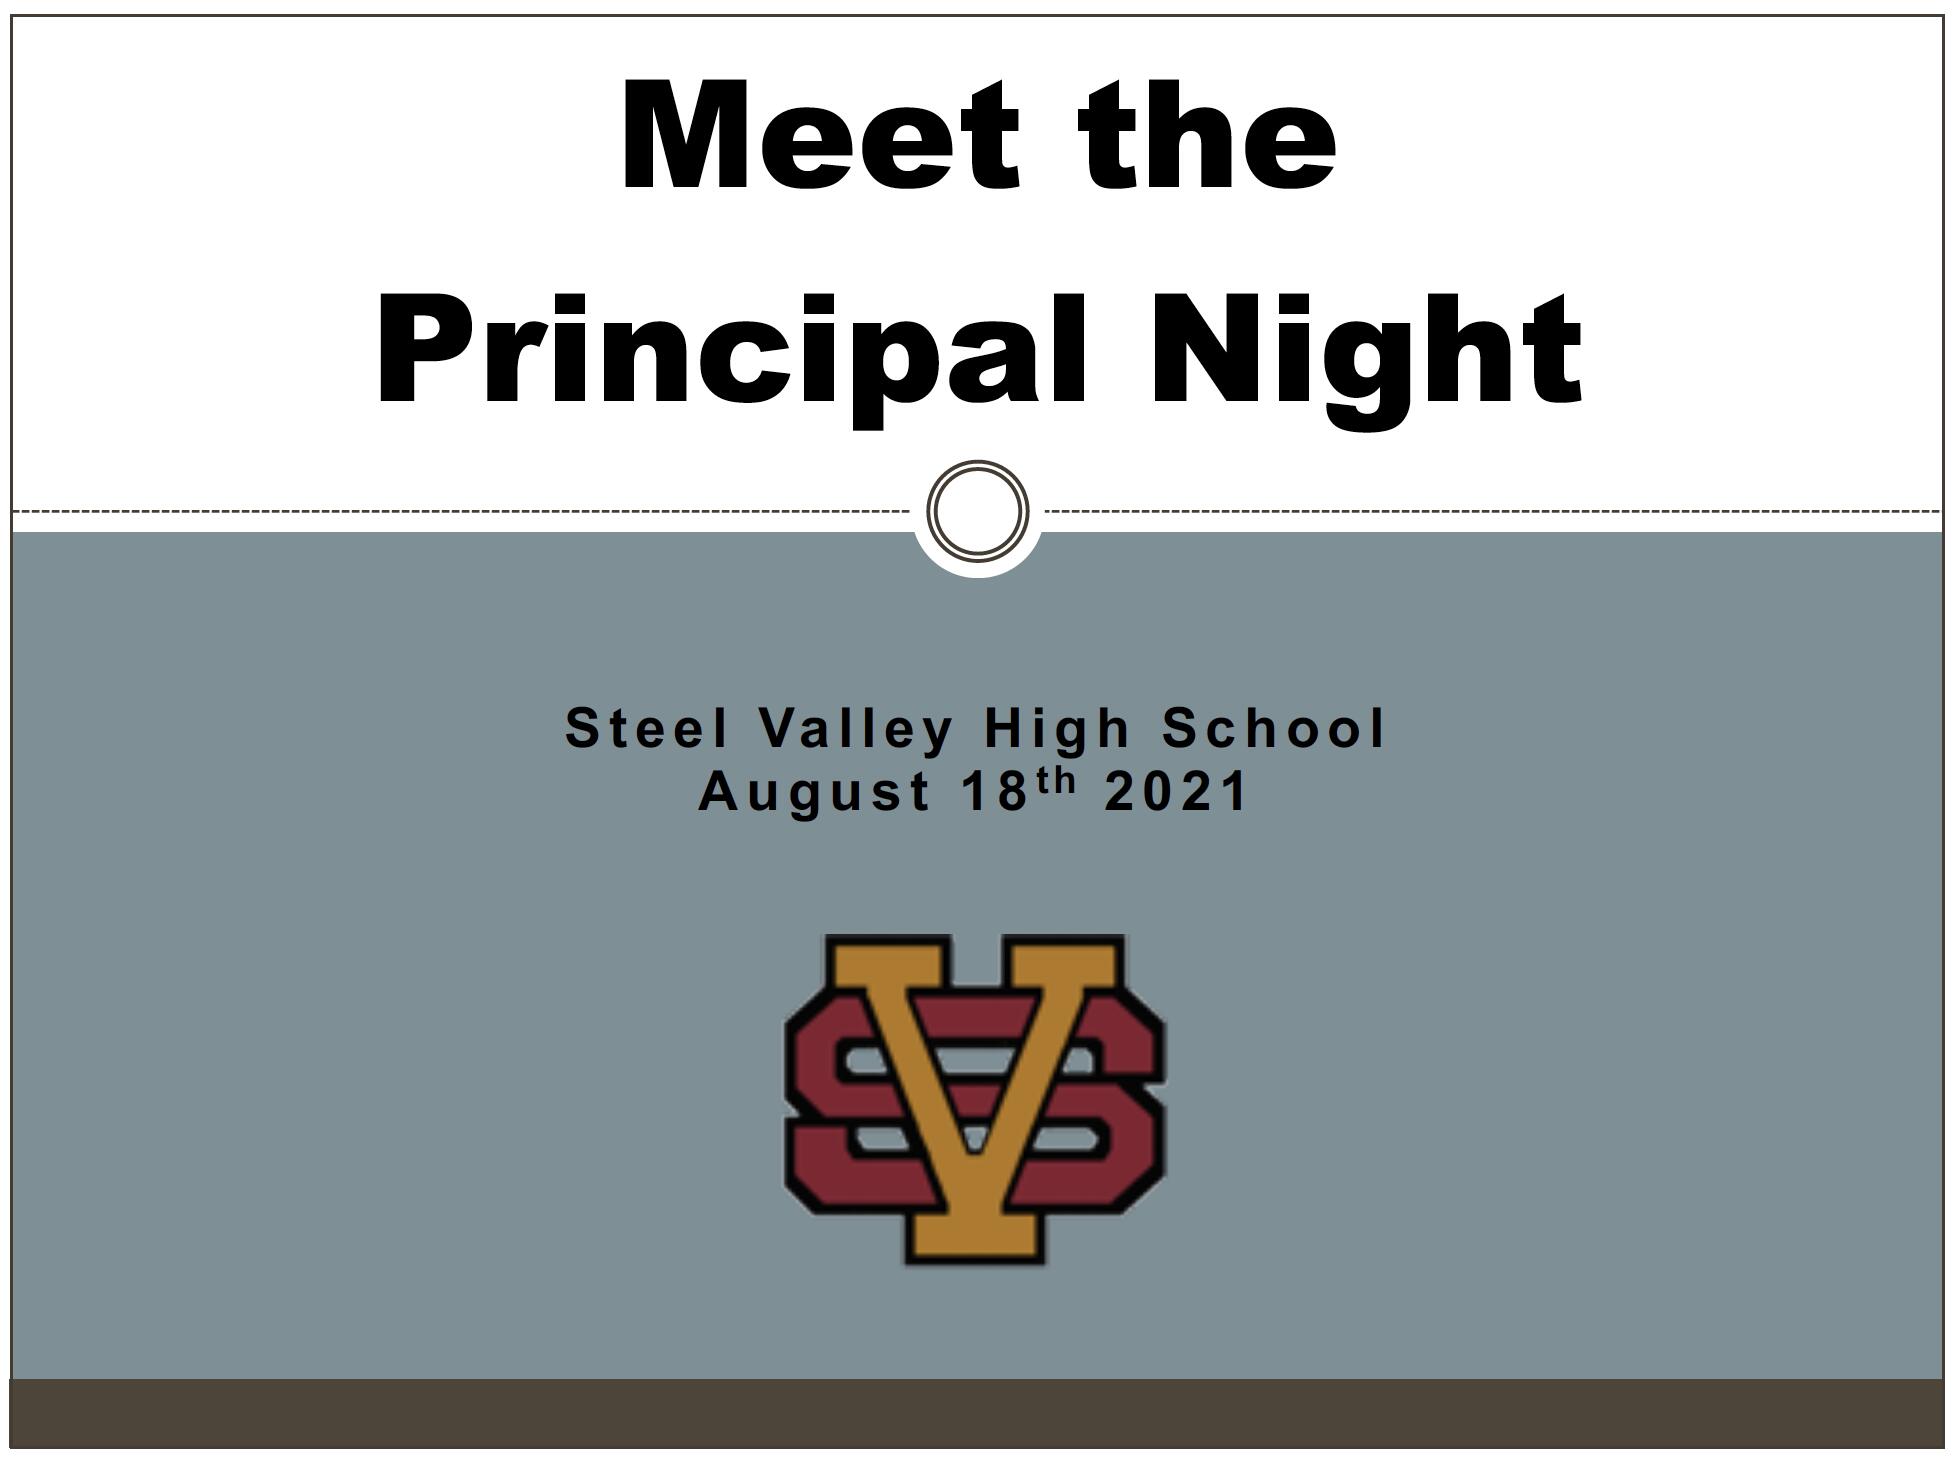 Meet the Principal Night